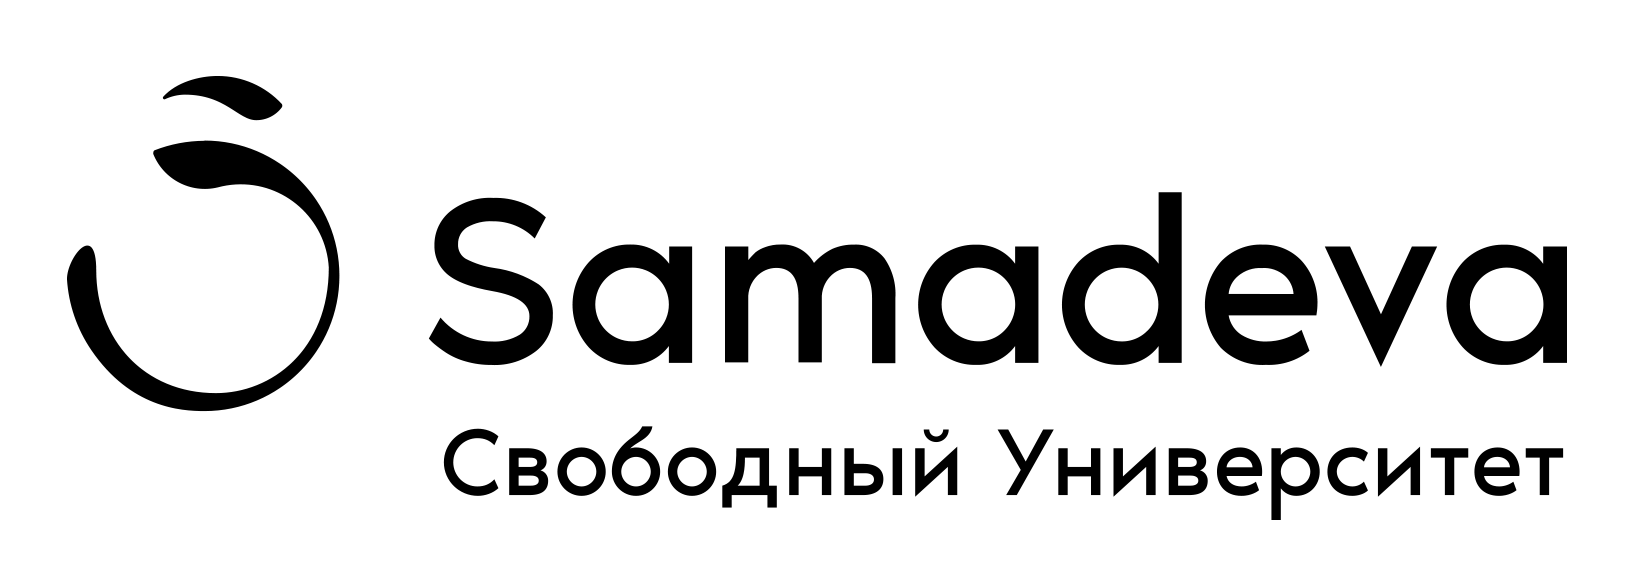 Samadeva